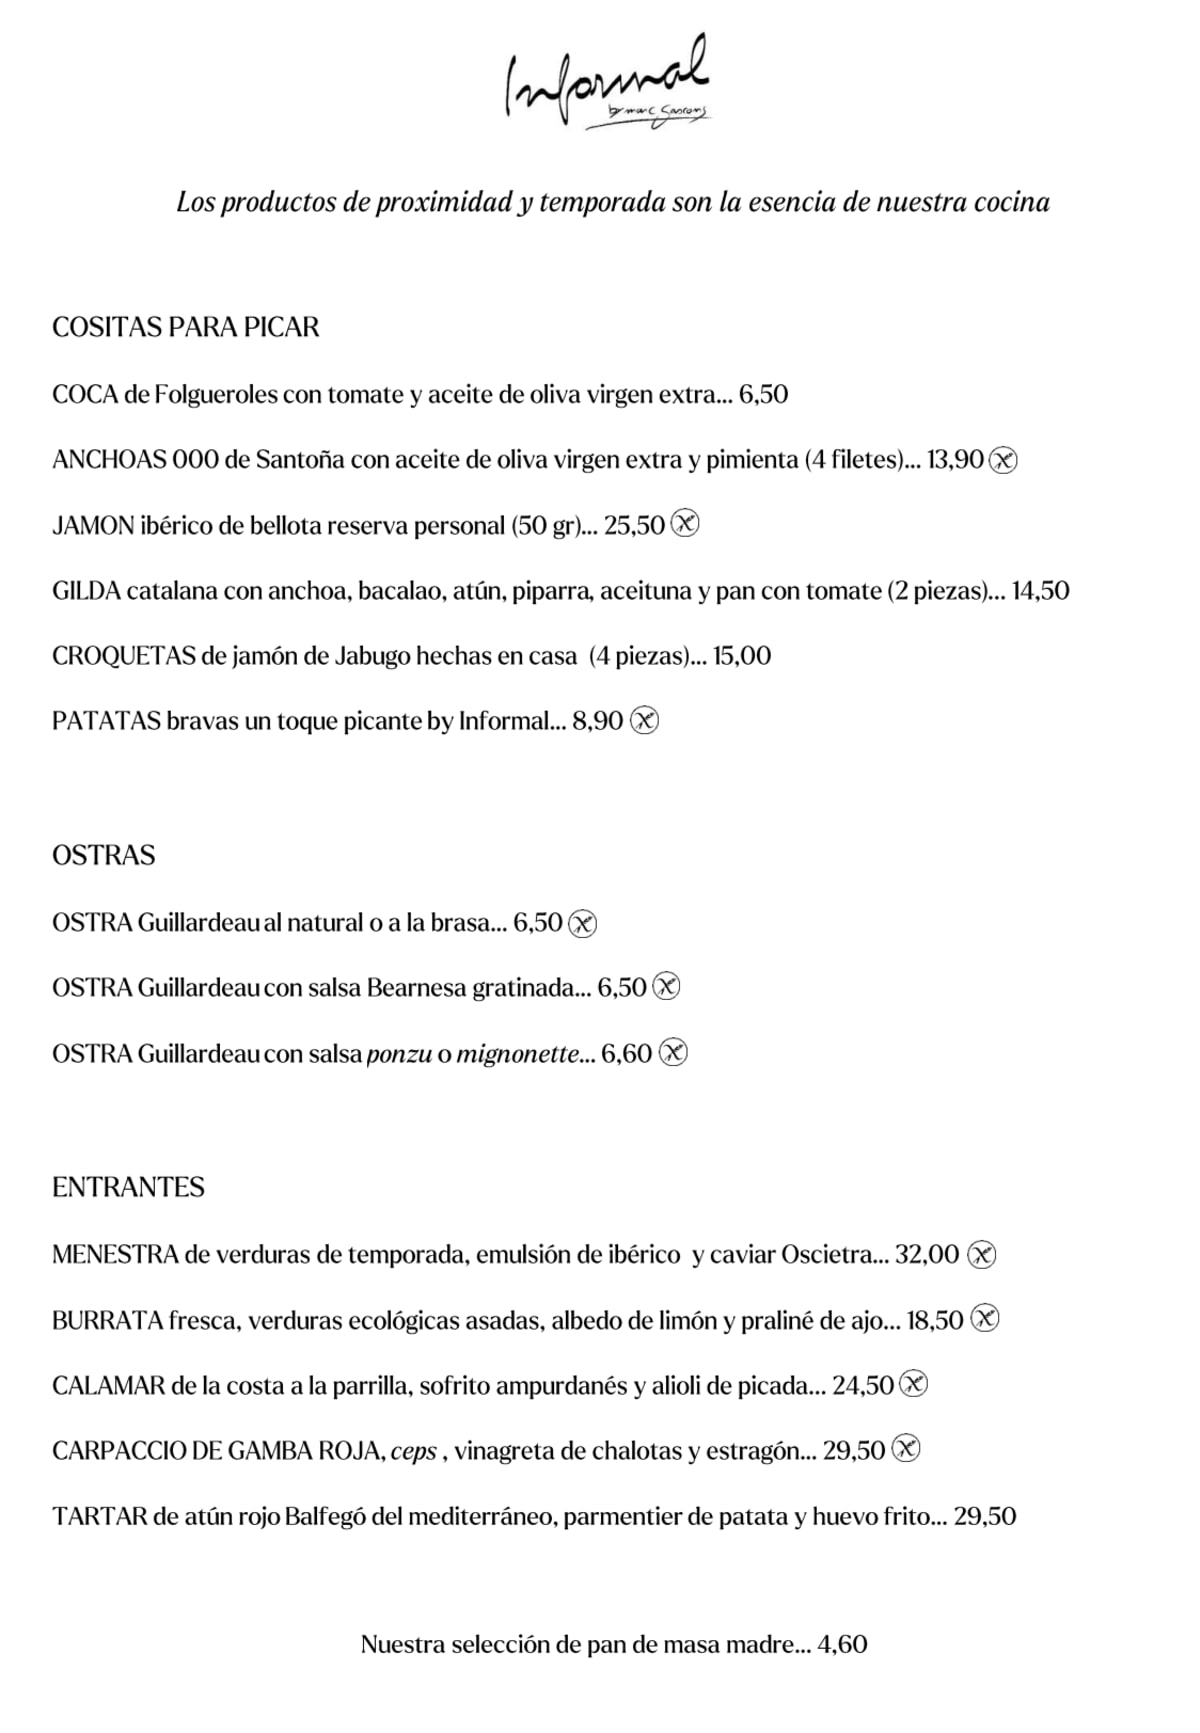 Informal by Marc Gascons- Hotel Serras menu